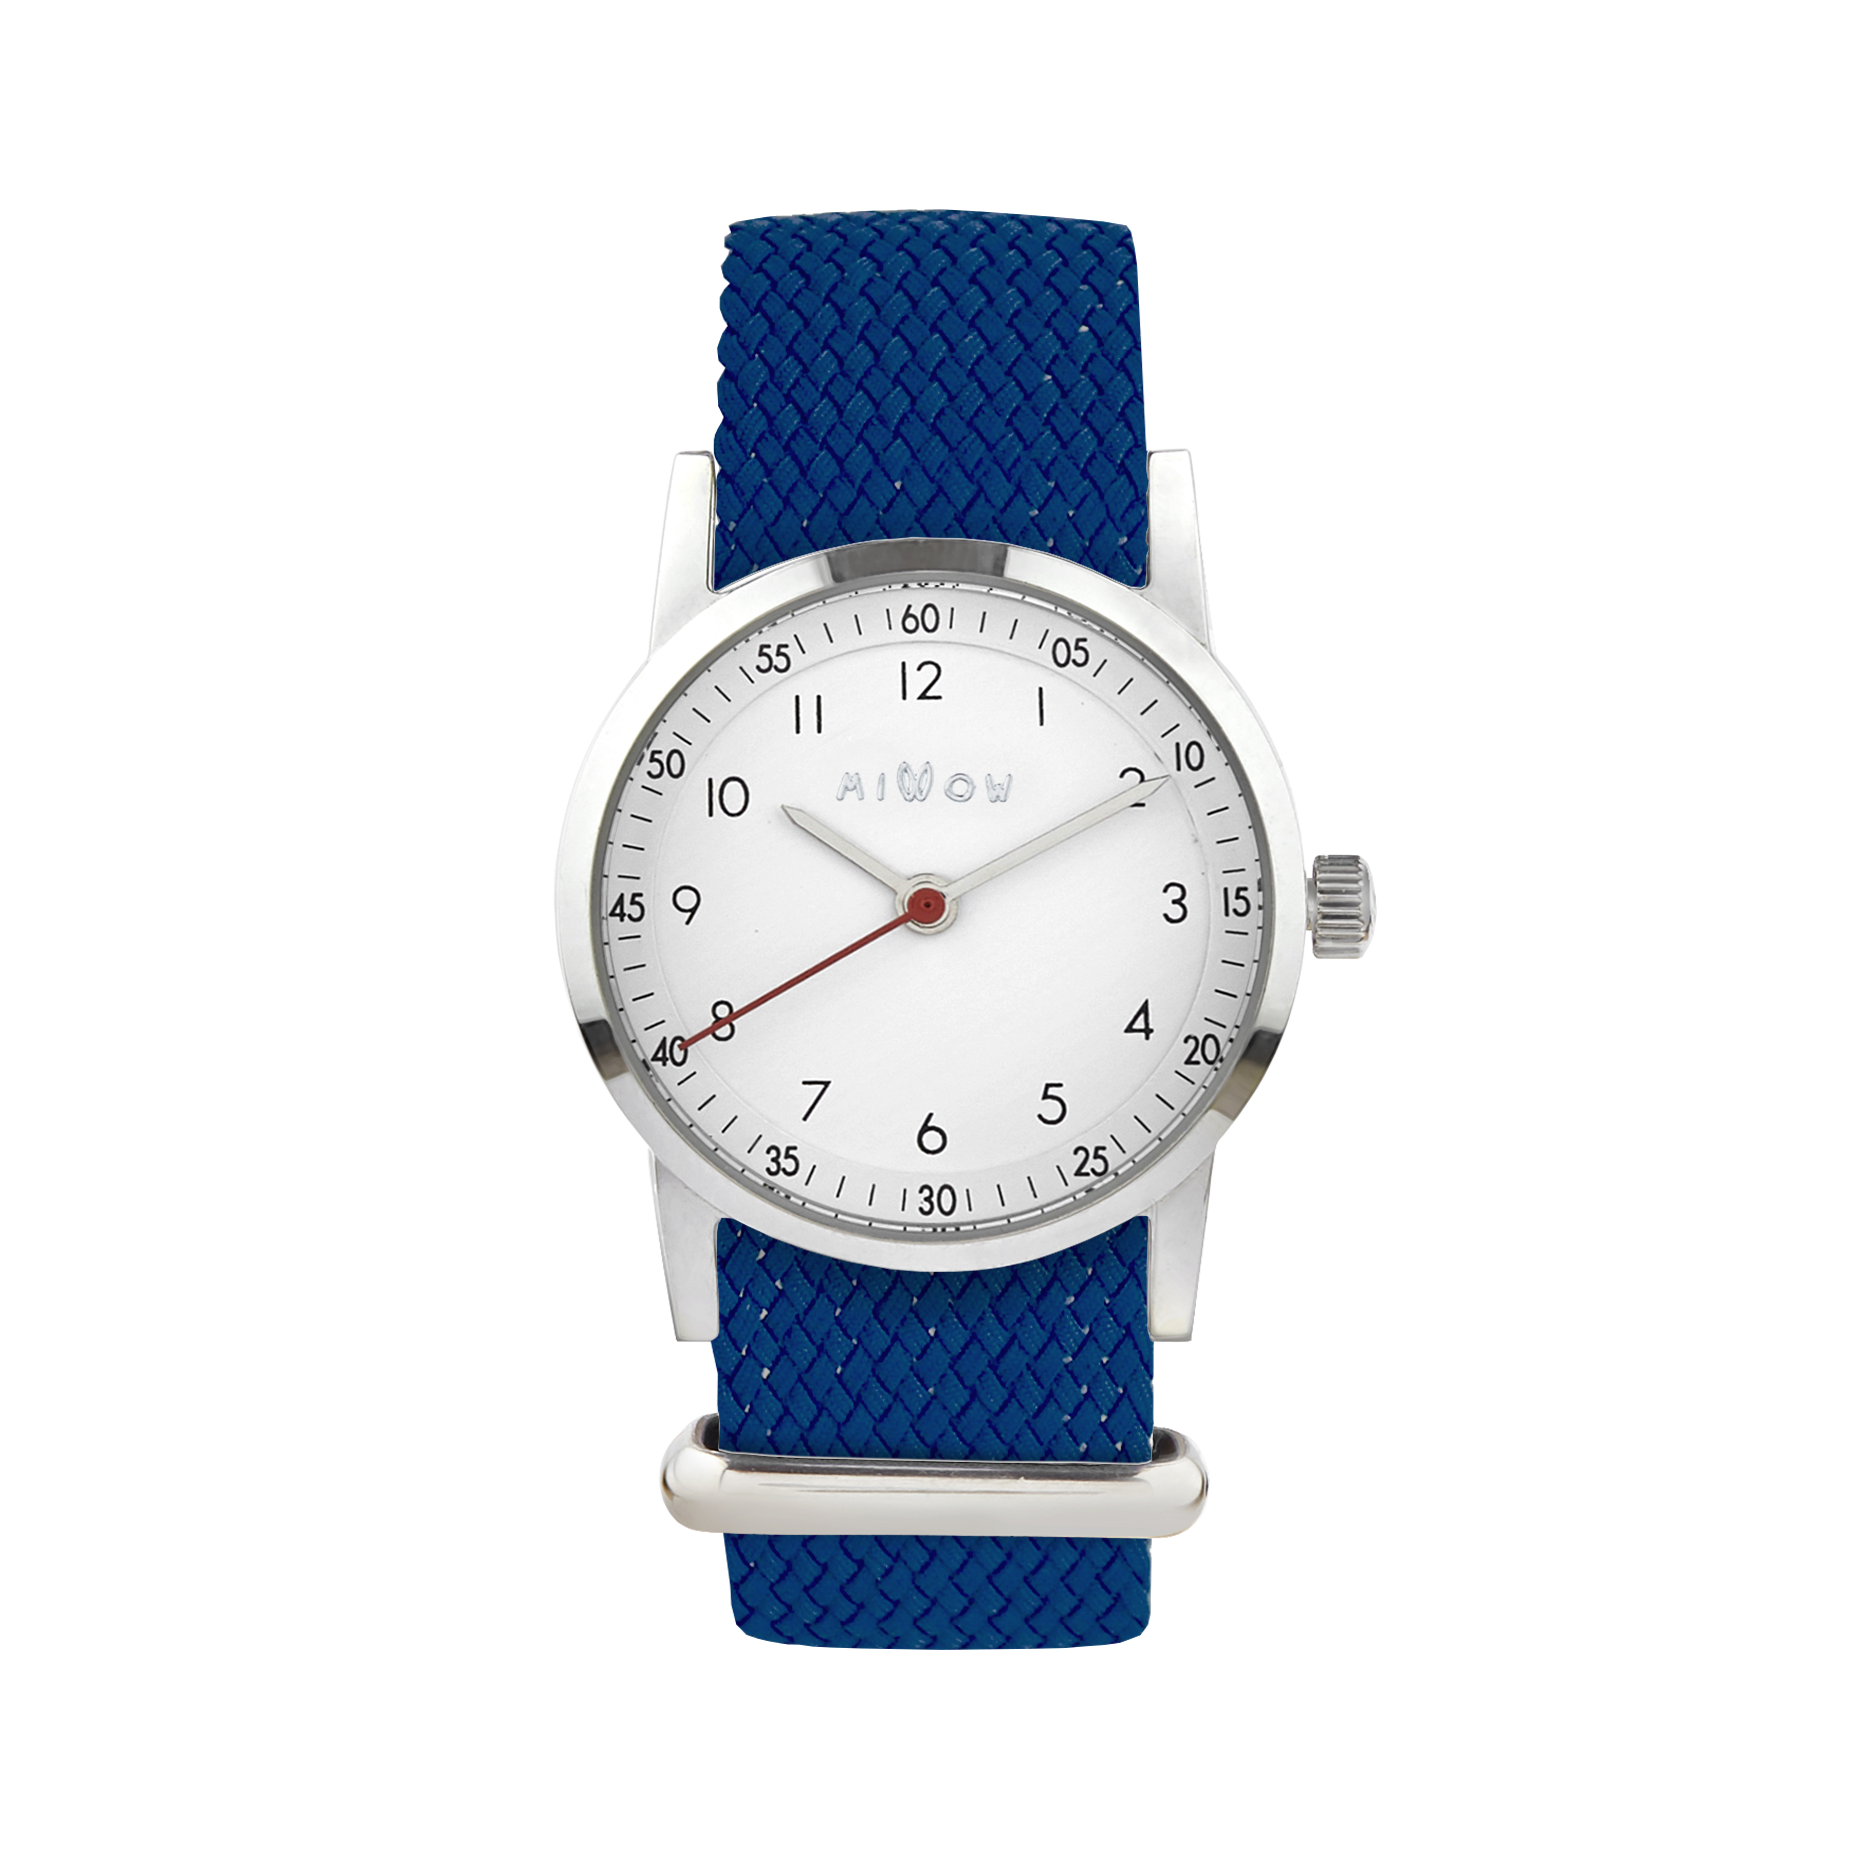 Millow Paris Millow Classic Watch For Children - Braided Blue Strap Watche